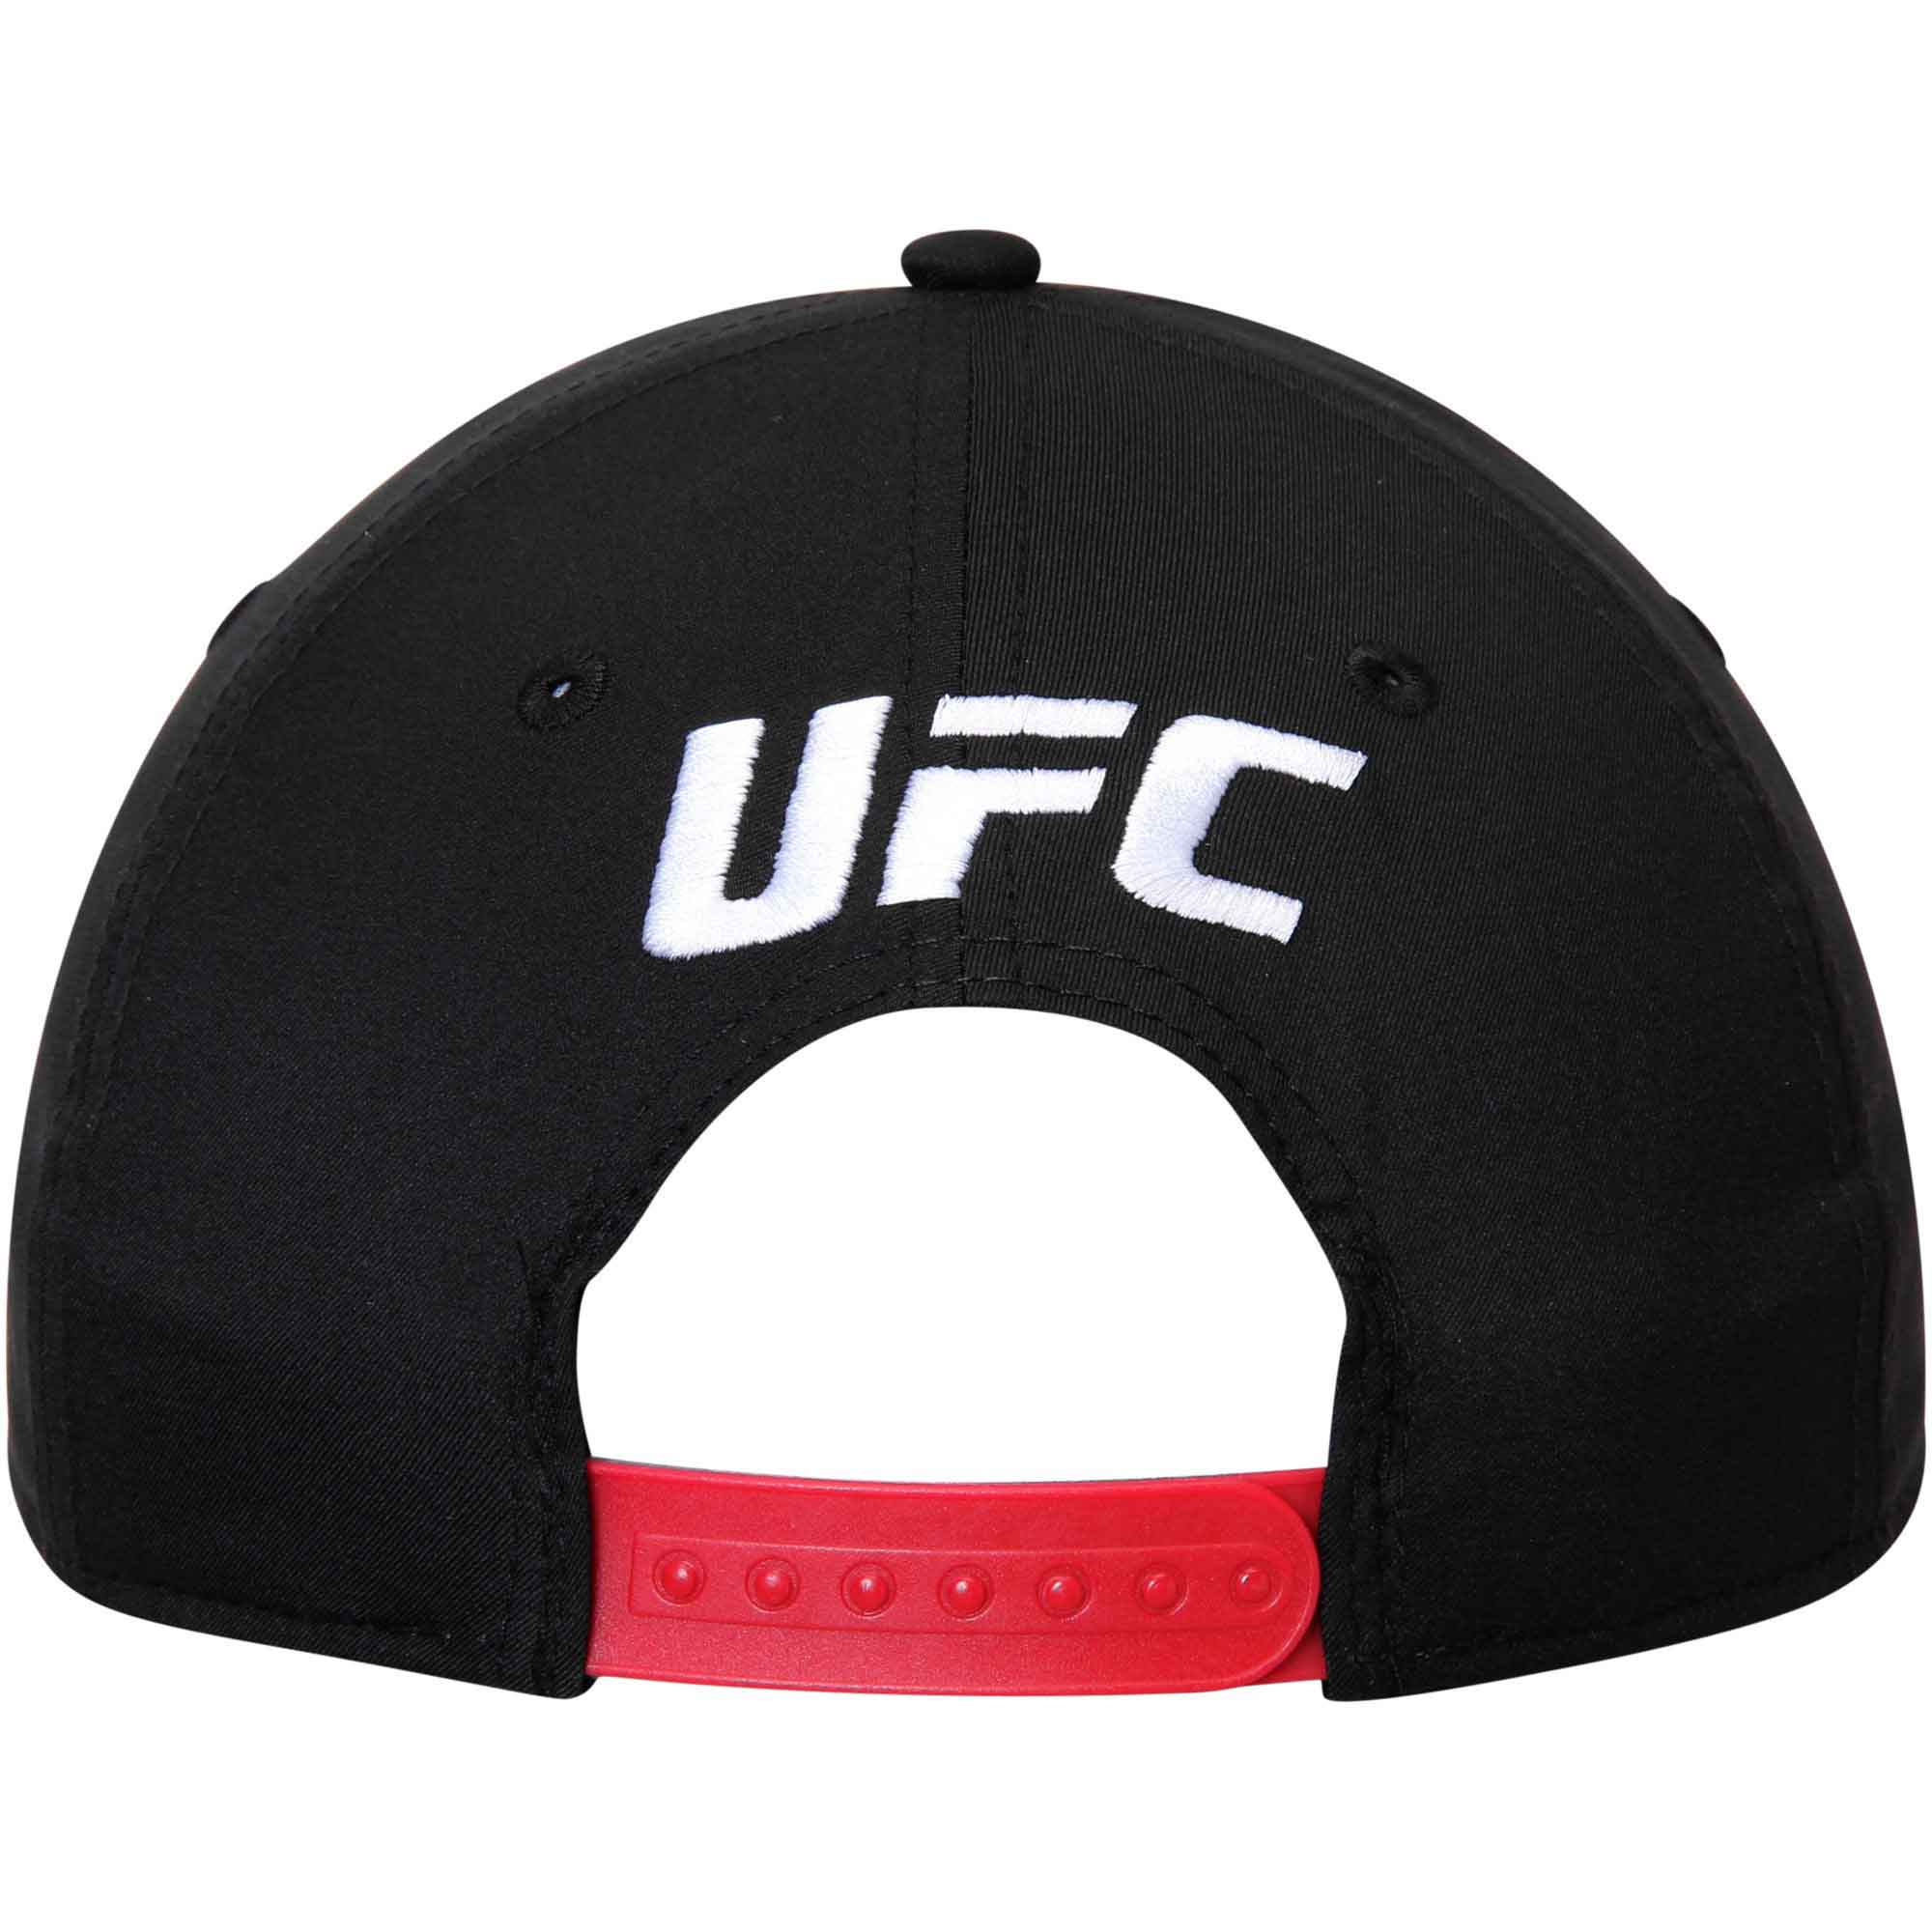 Reebok/リーボック キャップ UFC Pride Reebok Structured Adjustable Hat b